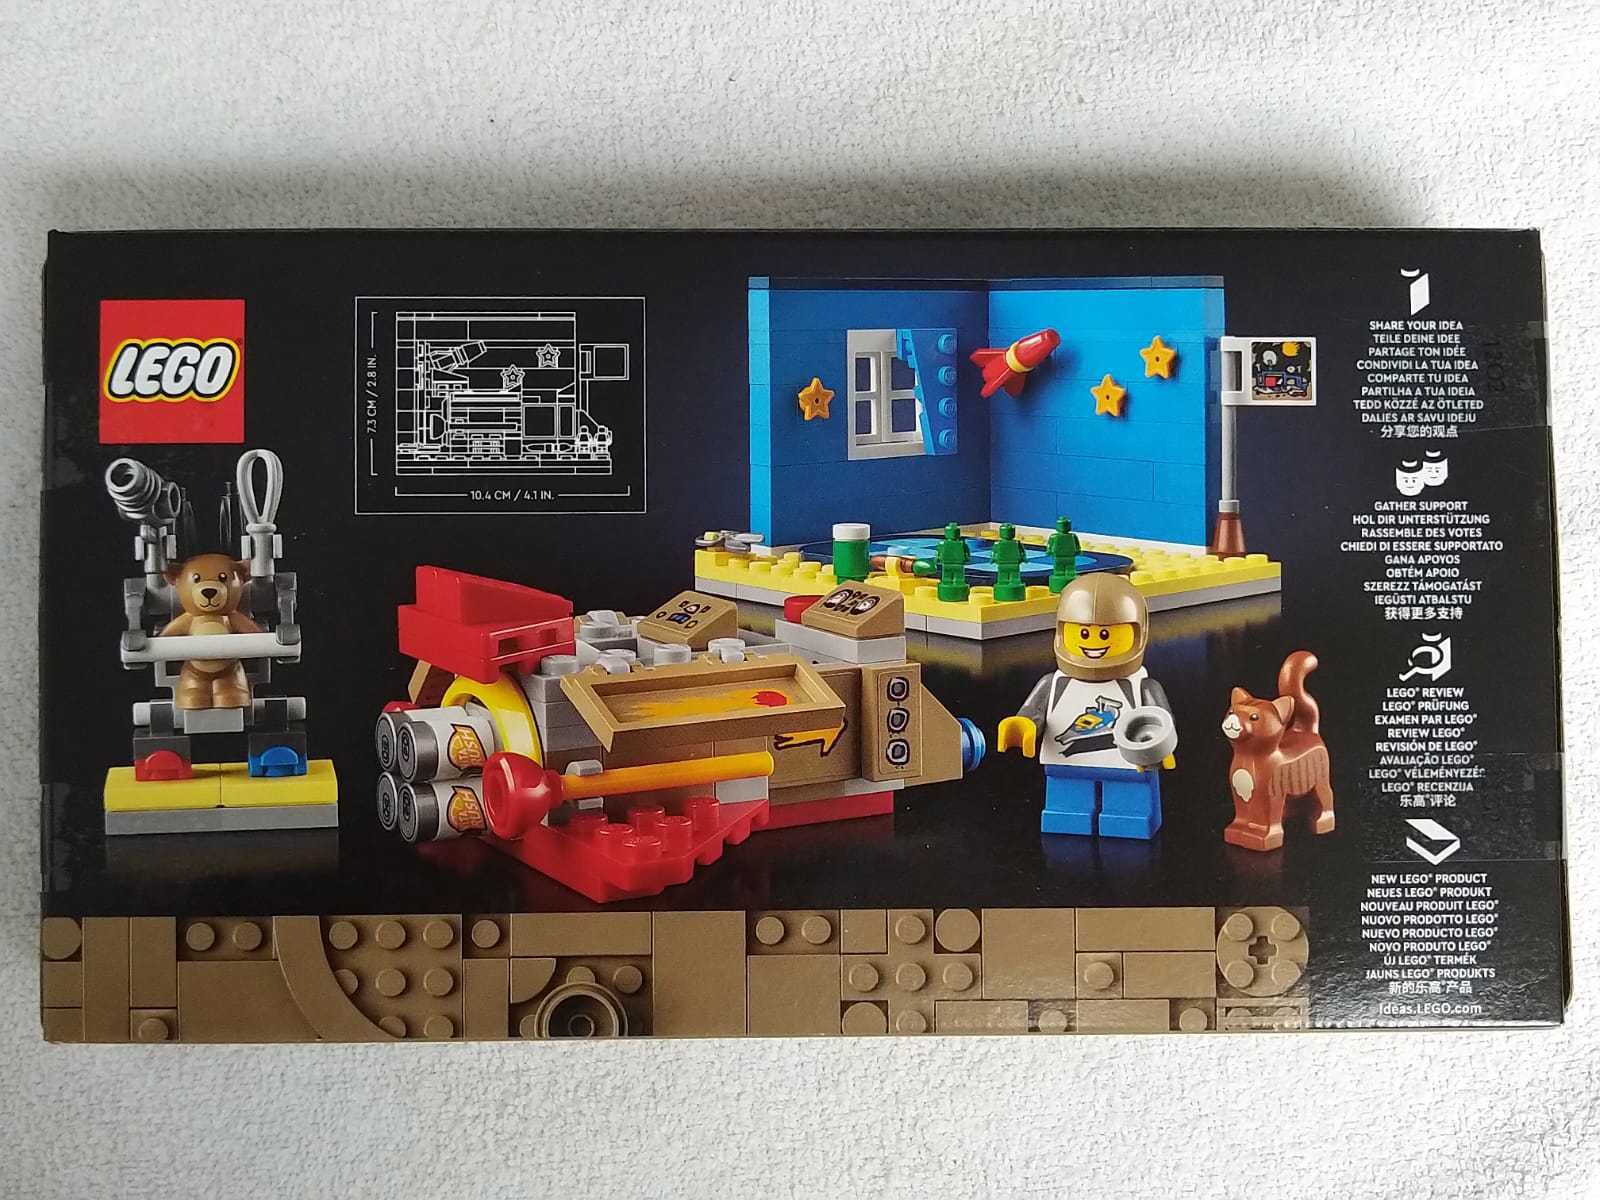 Vand set LEGO 40533 Cosmic Cardboard Adventures, original, sigilat